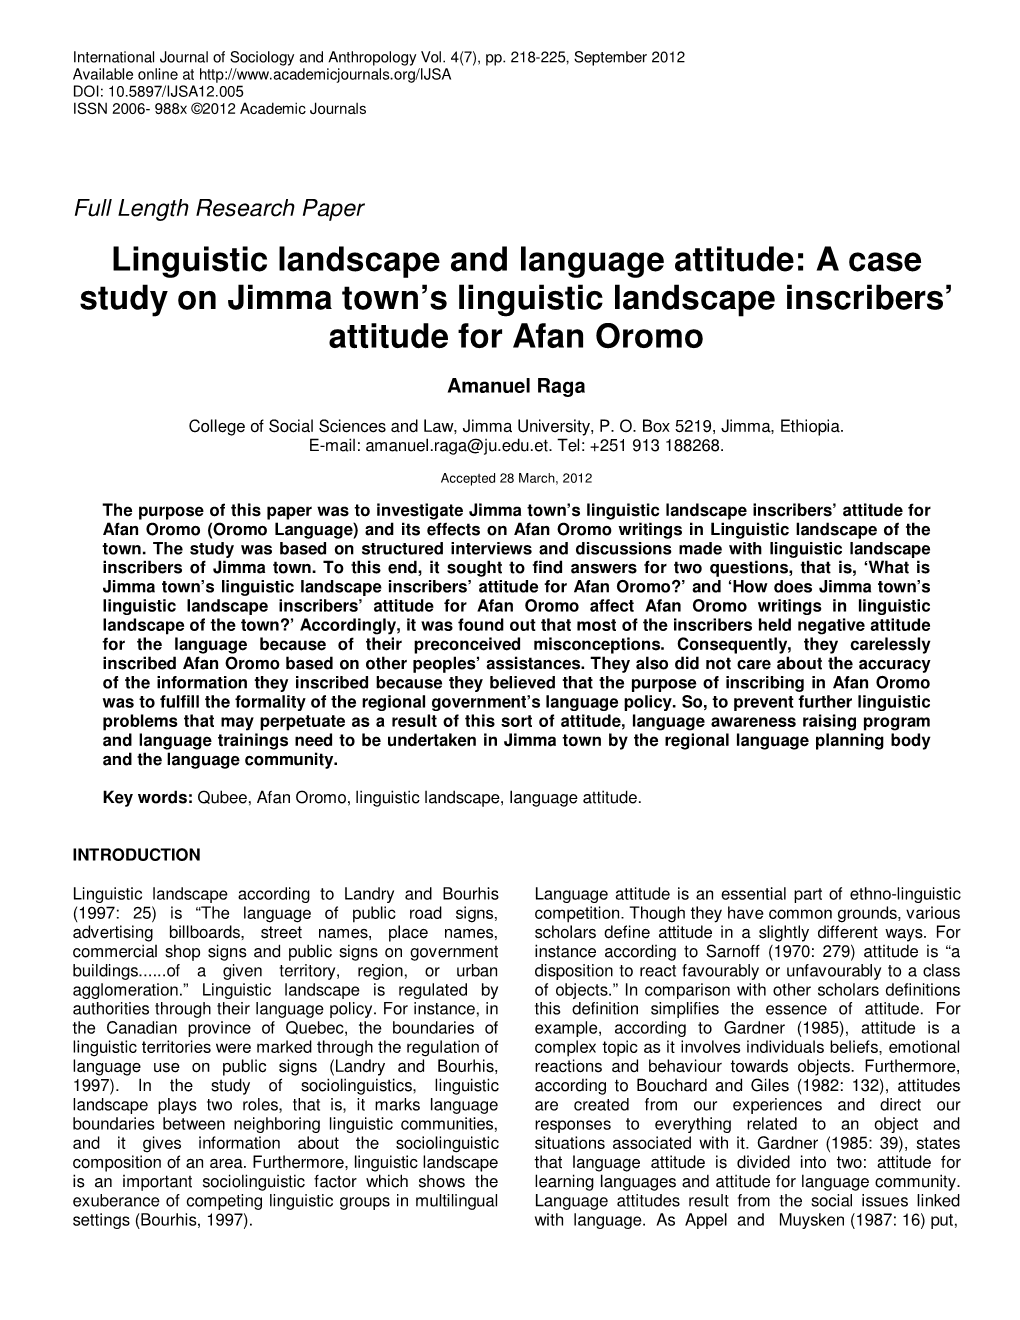 Linguistic Landscape and Language Attitude: a Case Study on Jimma Town’S Linguistic Landscape Inscribers’ Attitude for Afan Oromo